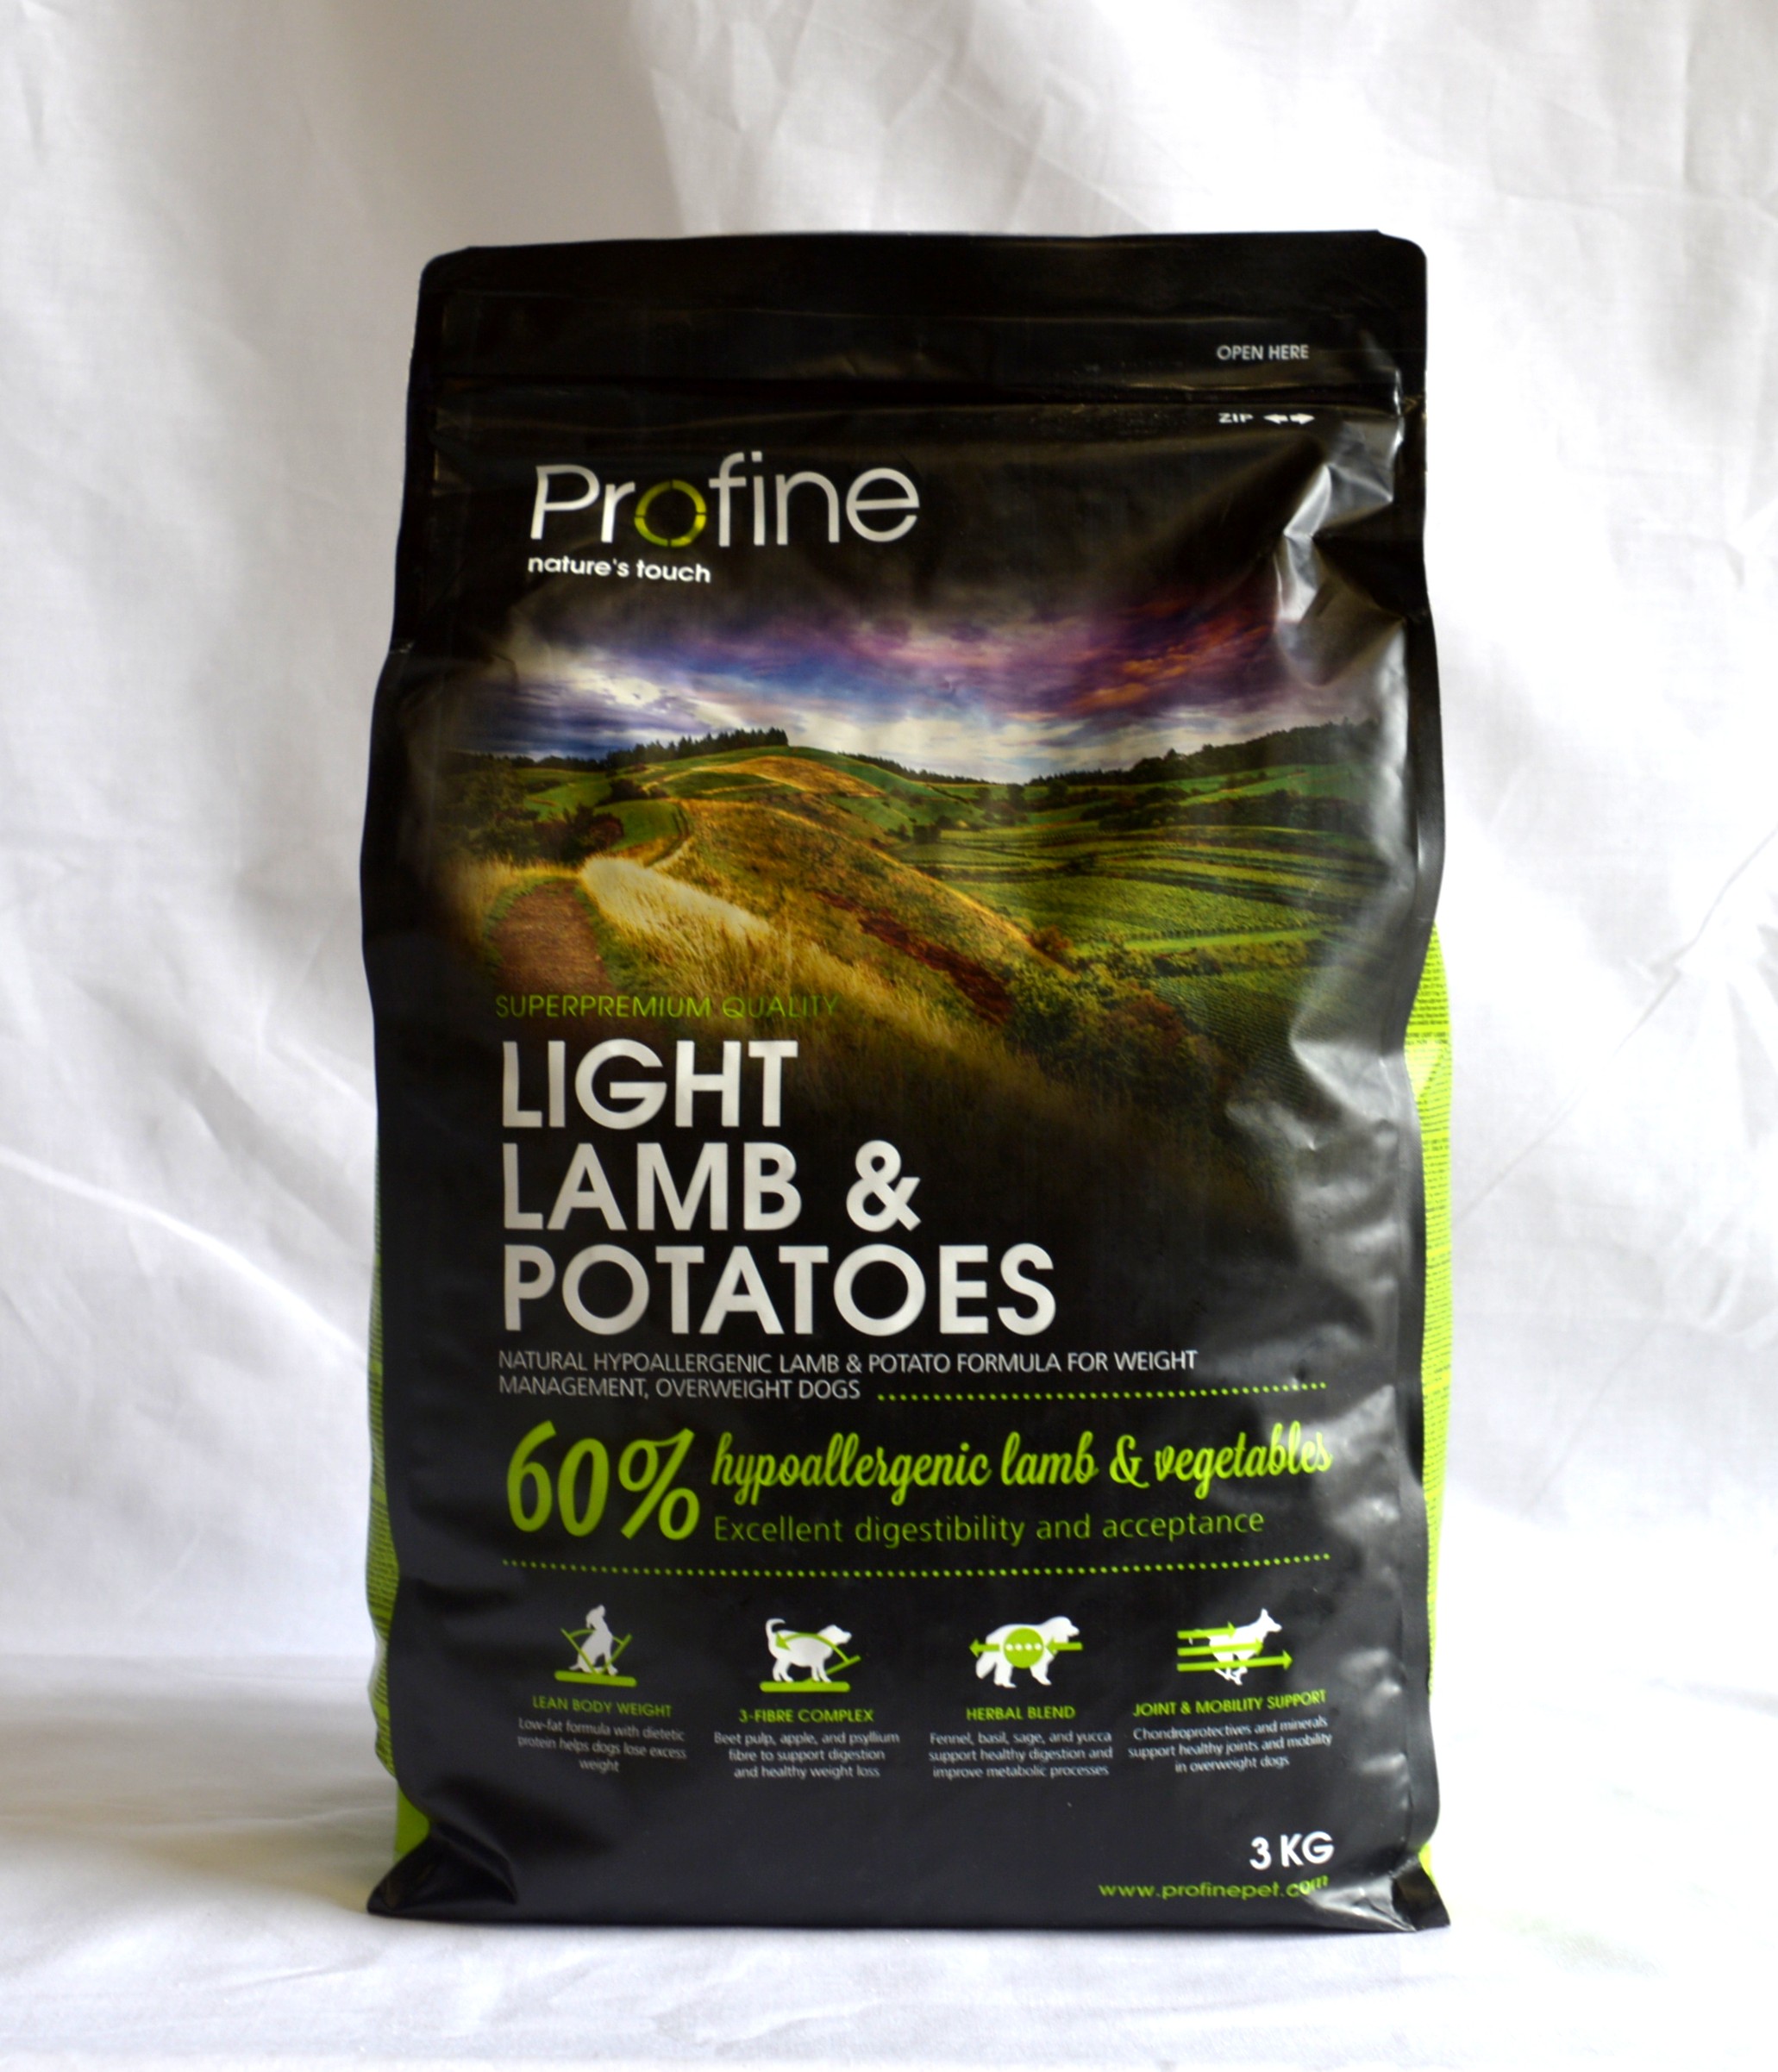 Profine Lamb & Potatoes Light-3kg